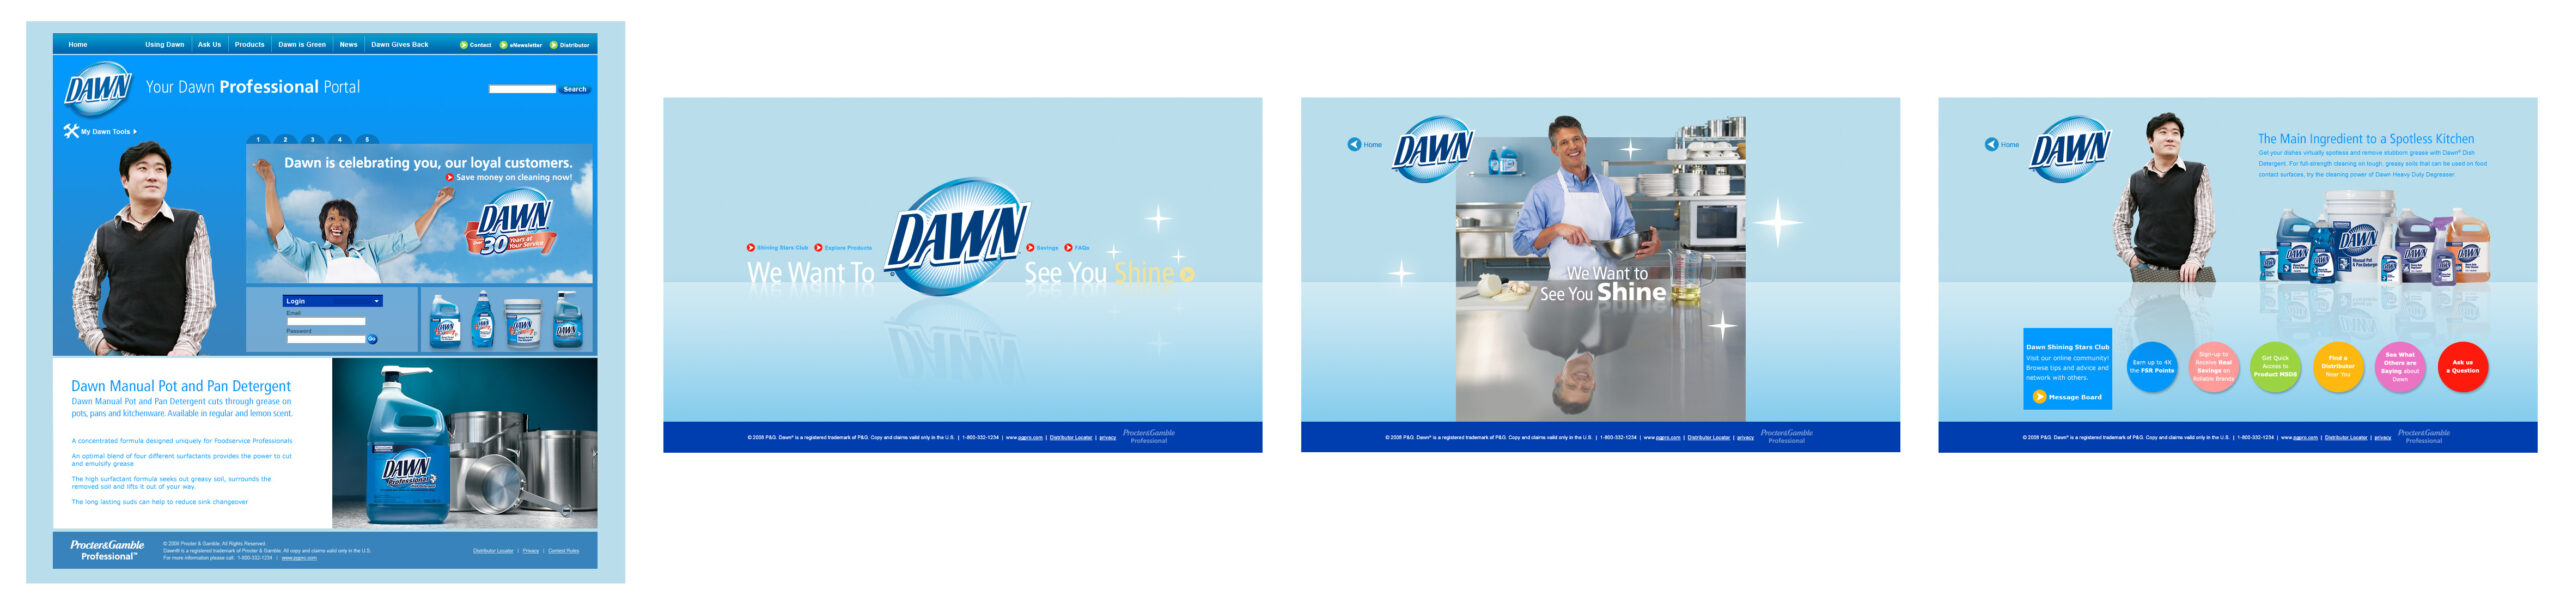 Dawn promotional website